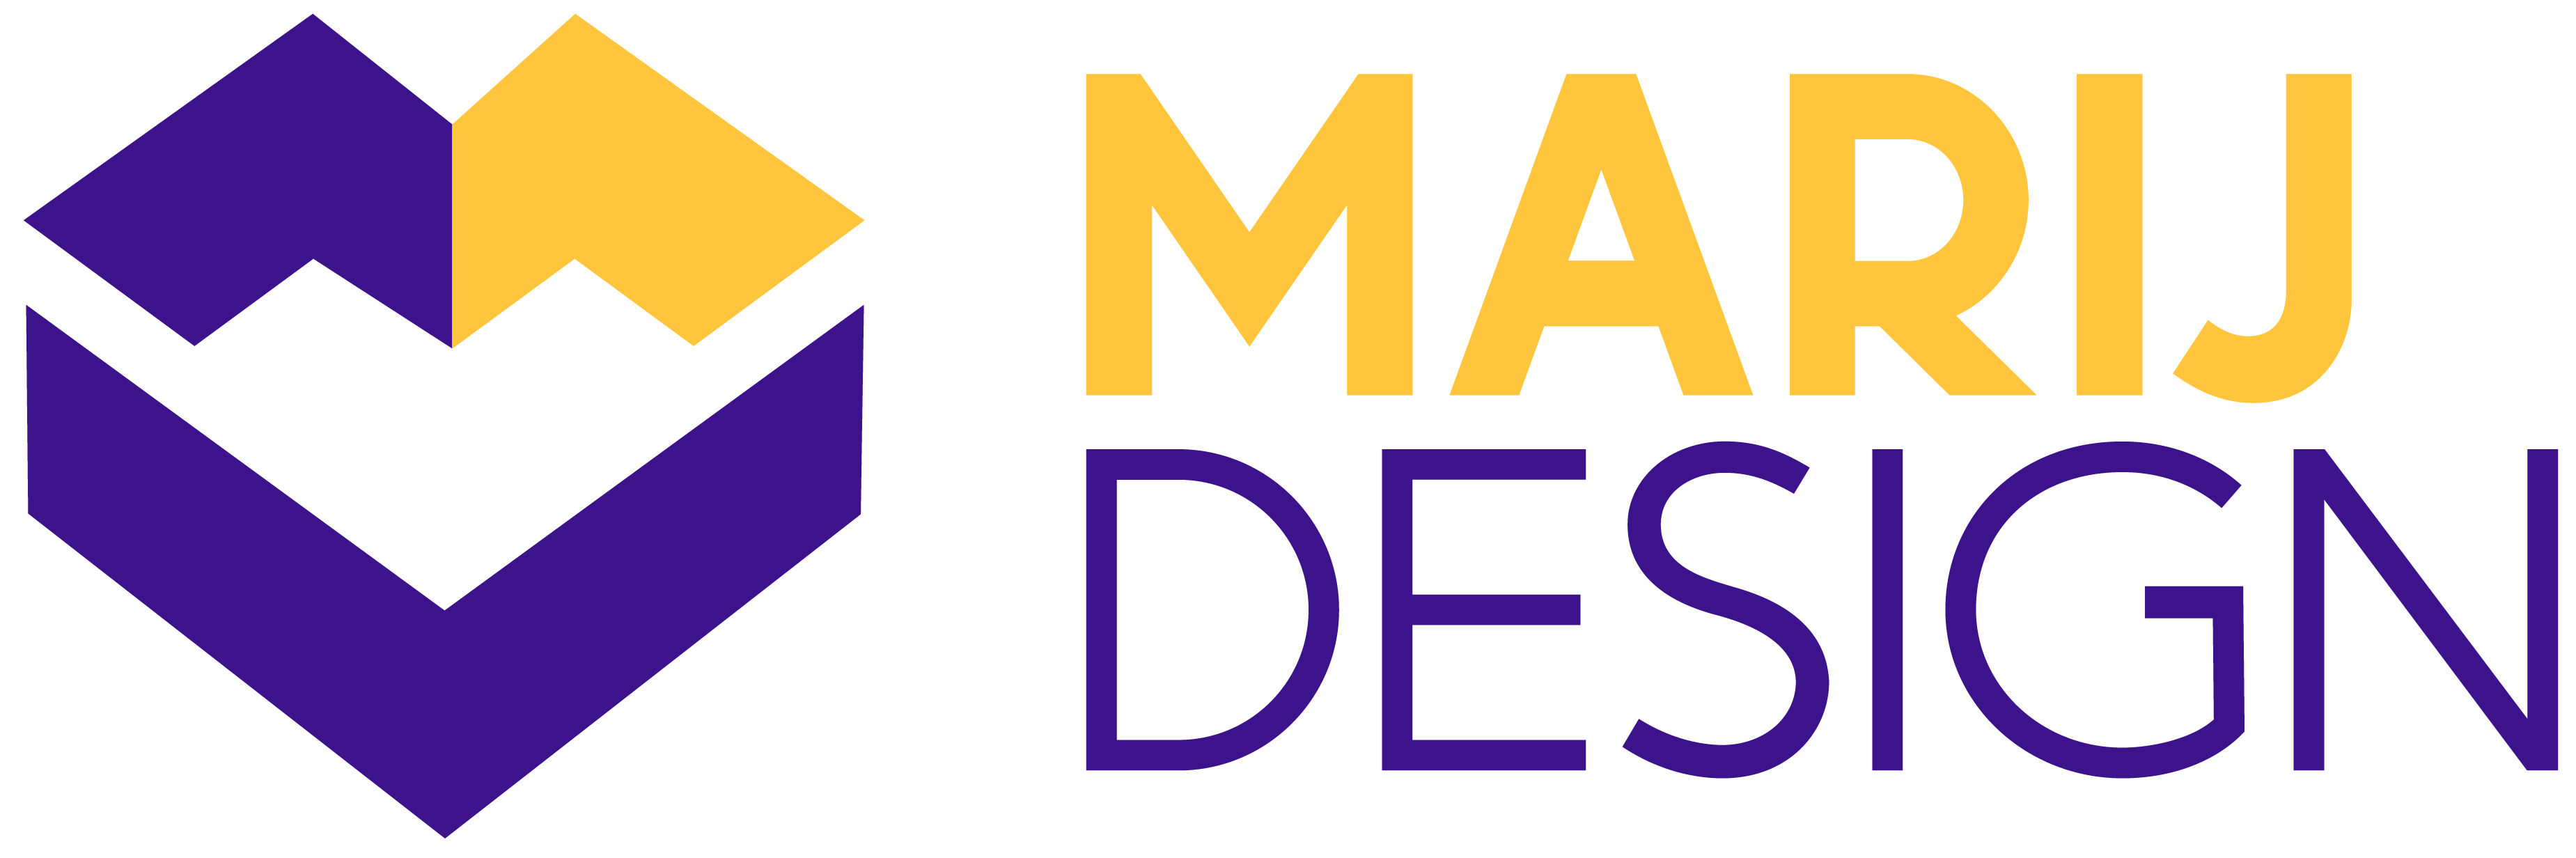 Marij Design